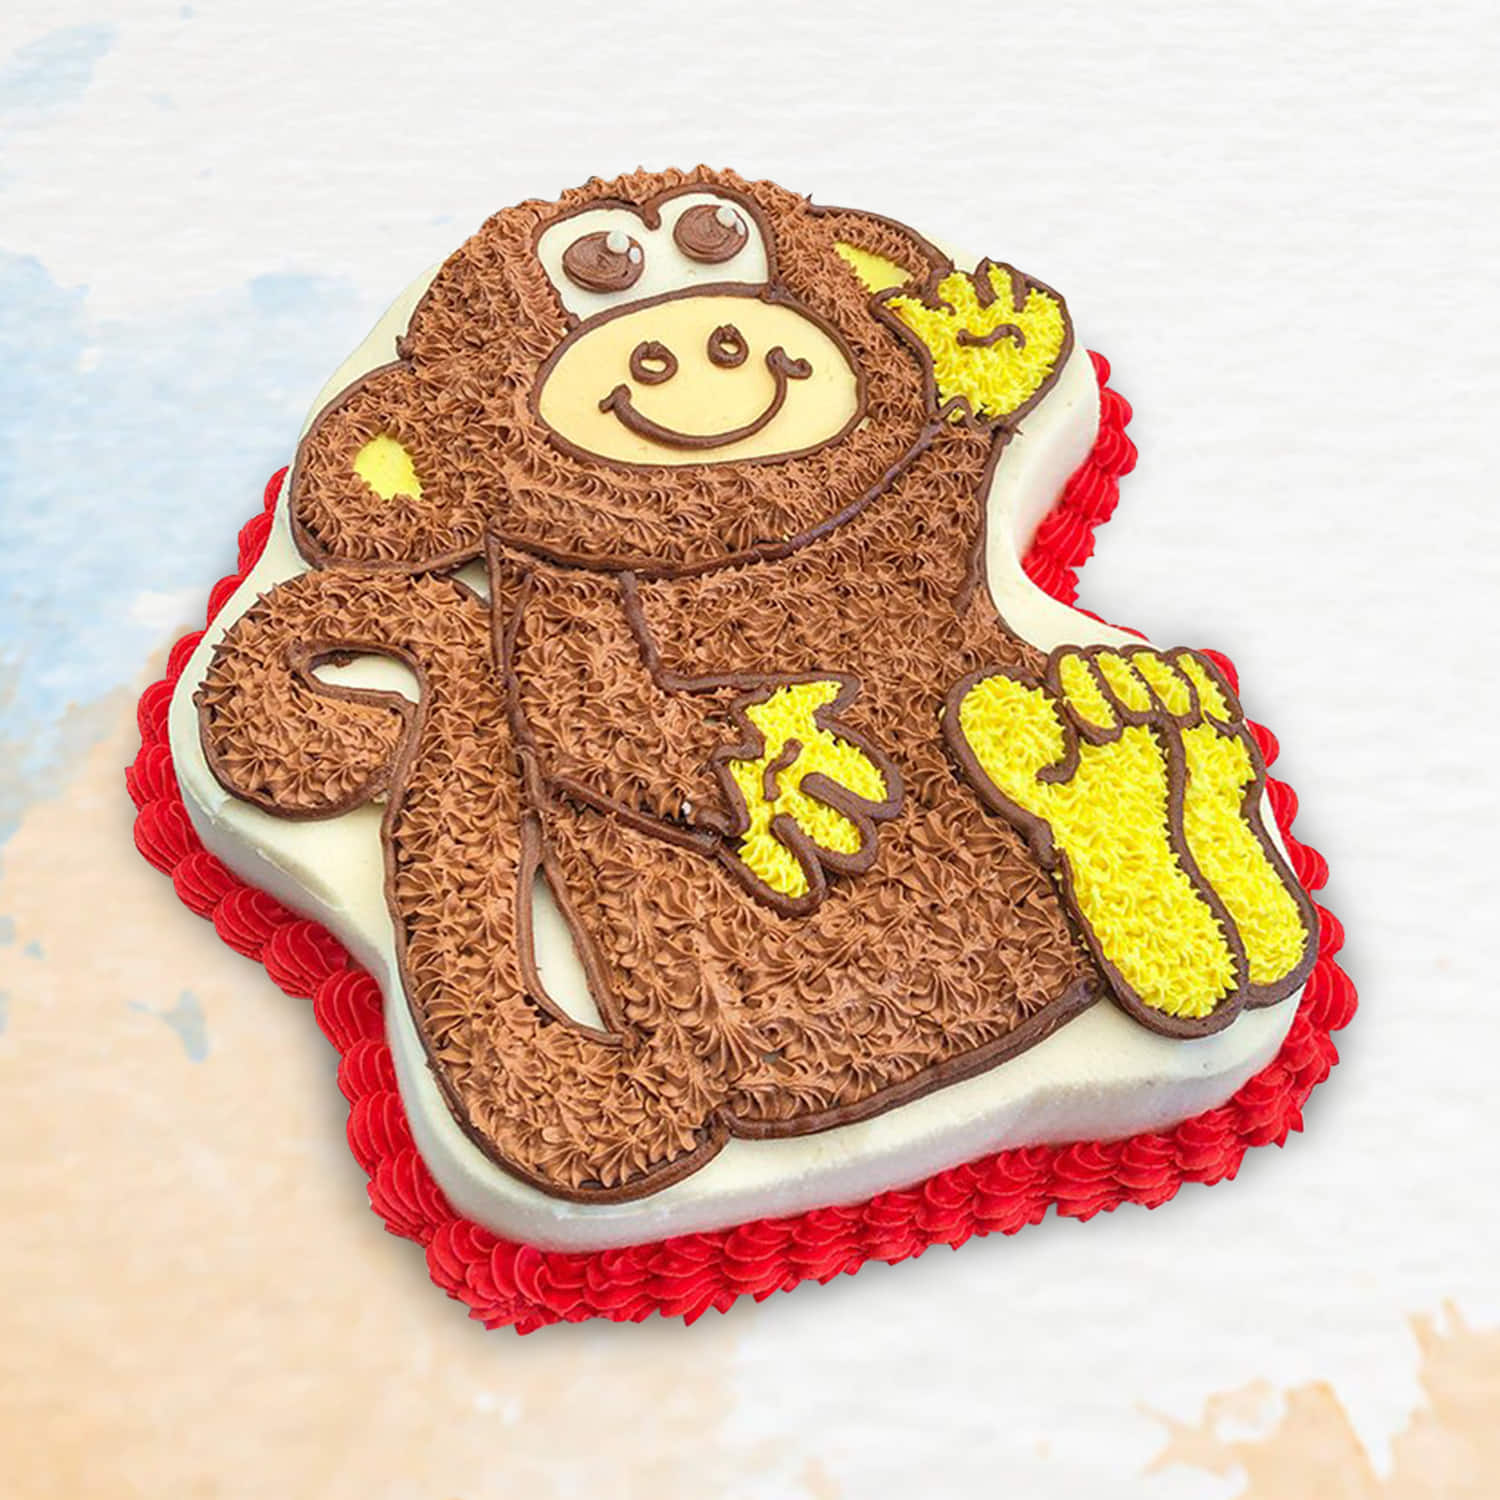 Monkey Themed Birthday Cake | The Blue Jar Blog